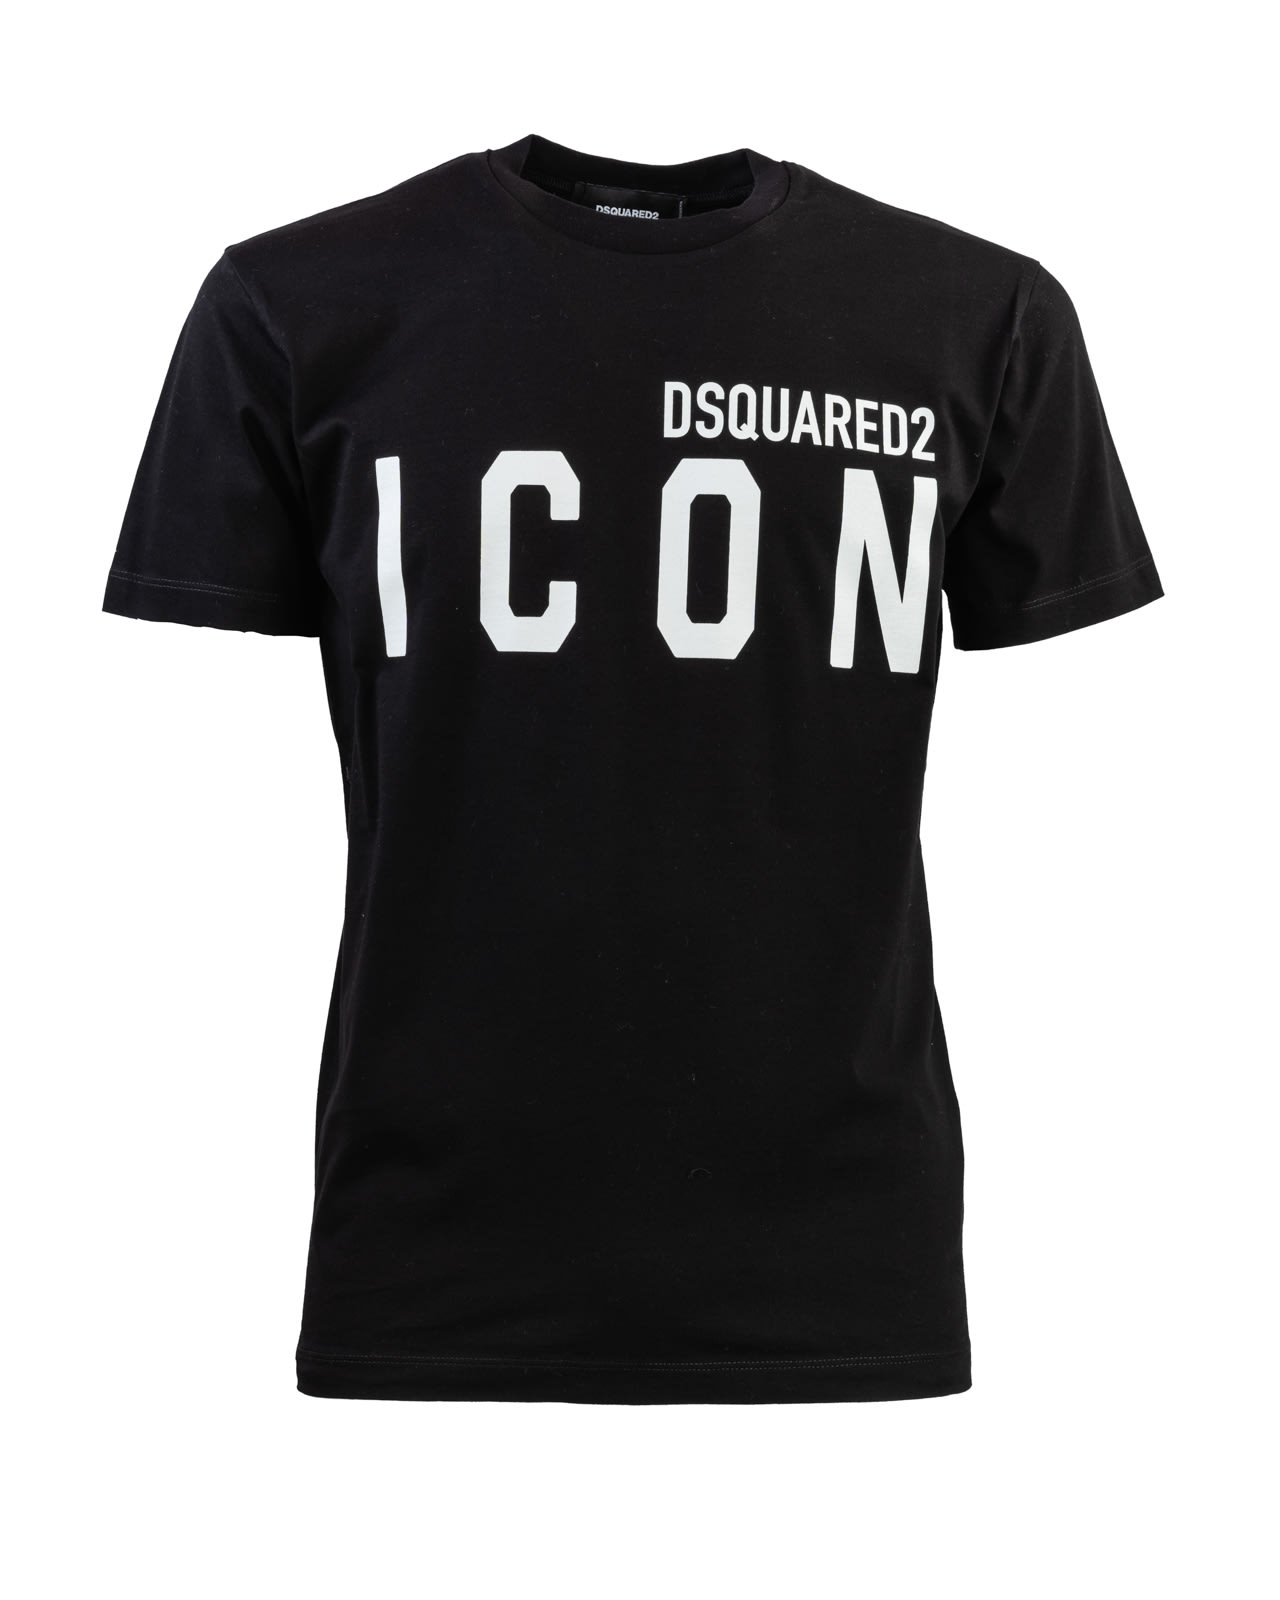 T-shirt Dsquared2 - DSQUARED - Tufano Moda